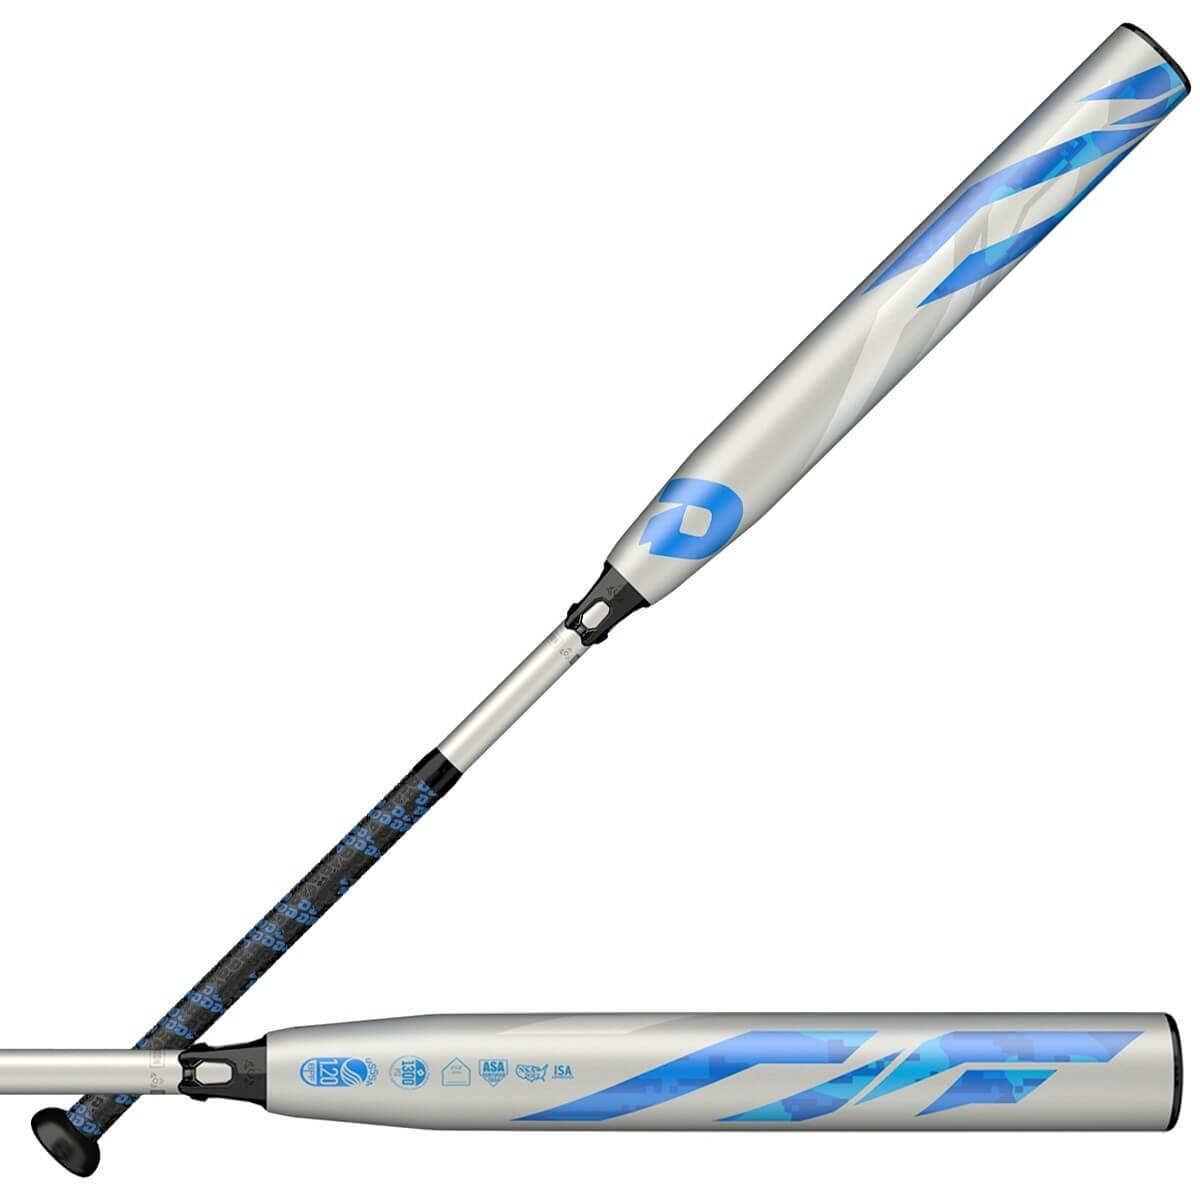 DeMarini 2019 CF Zen - 11 fastpitch softball bat